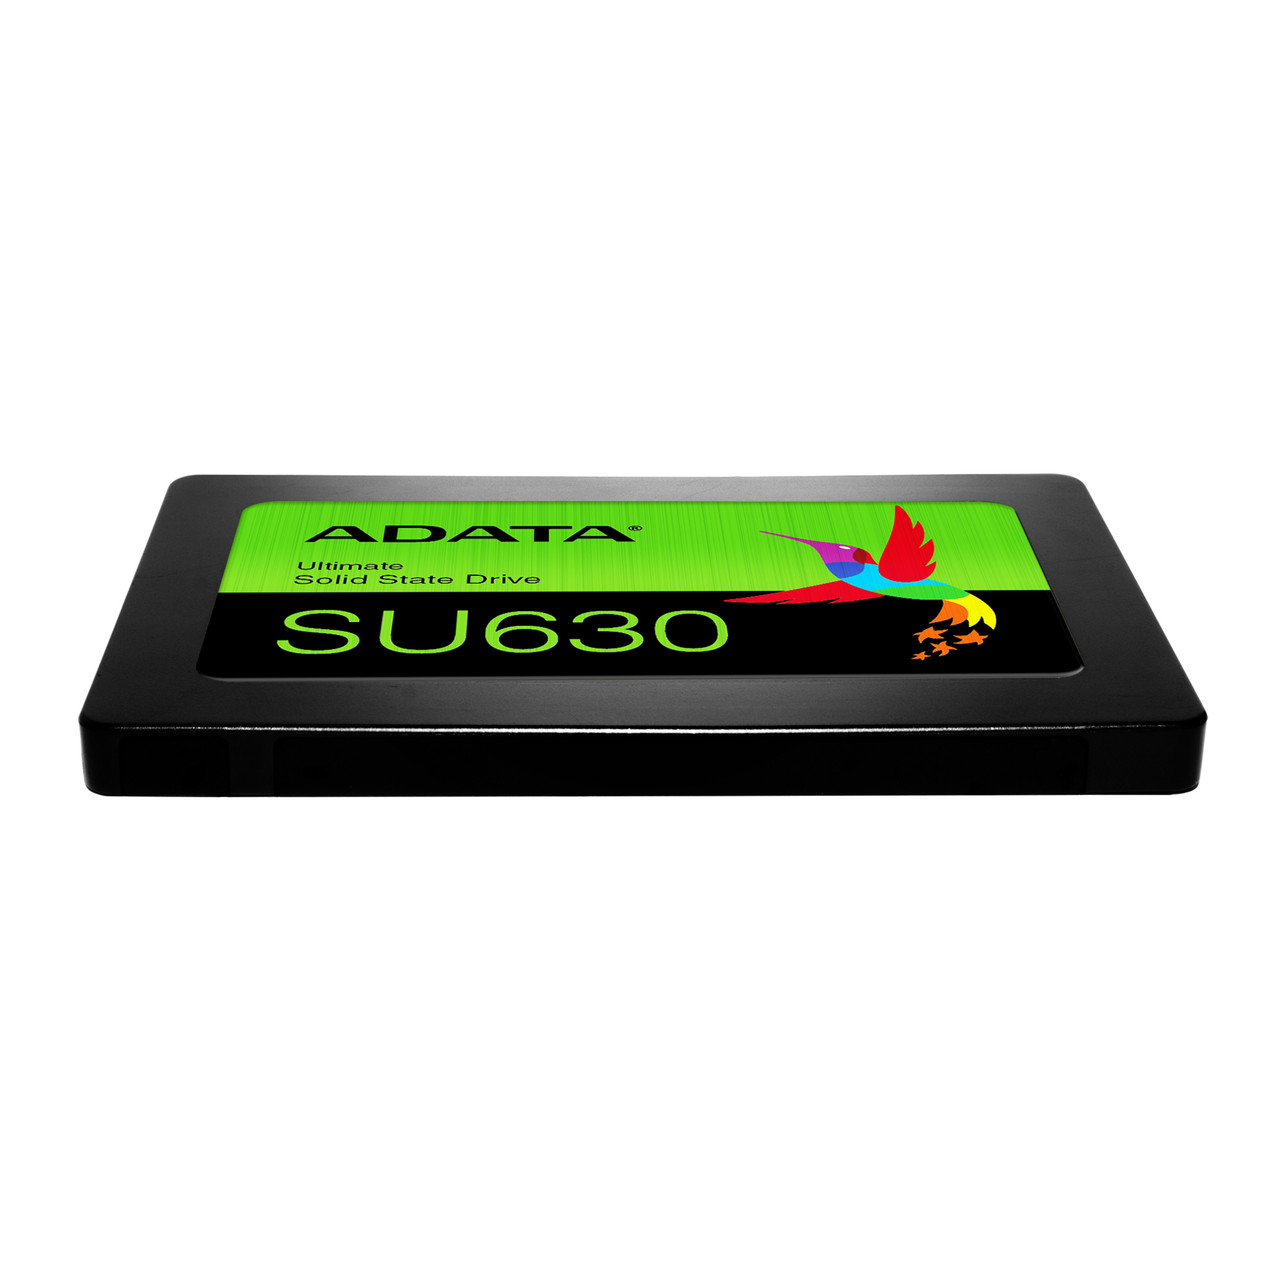 ADATA Ultimate Series: SU630 1.92TB SATA III - 2.5